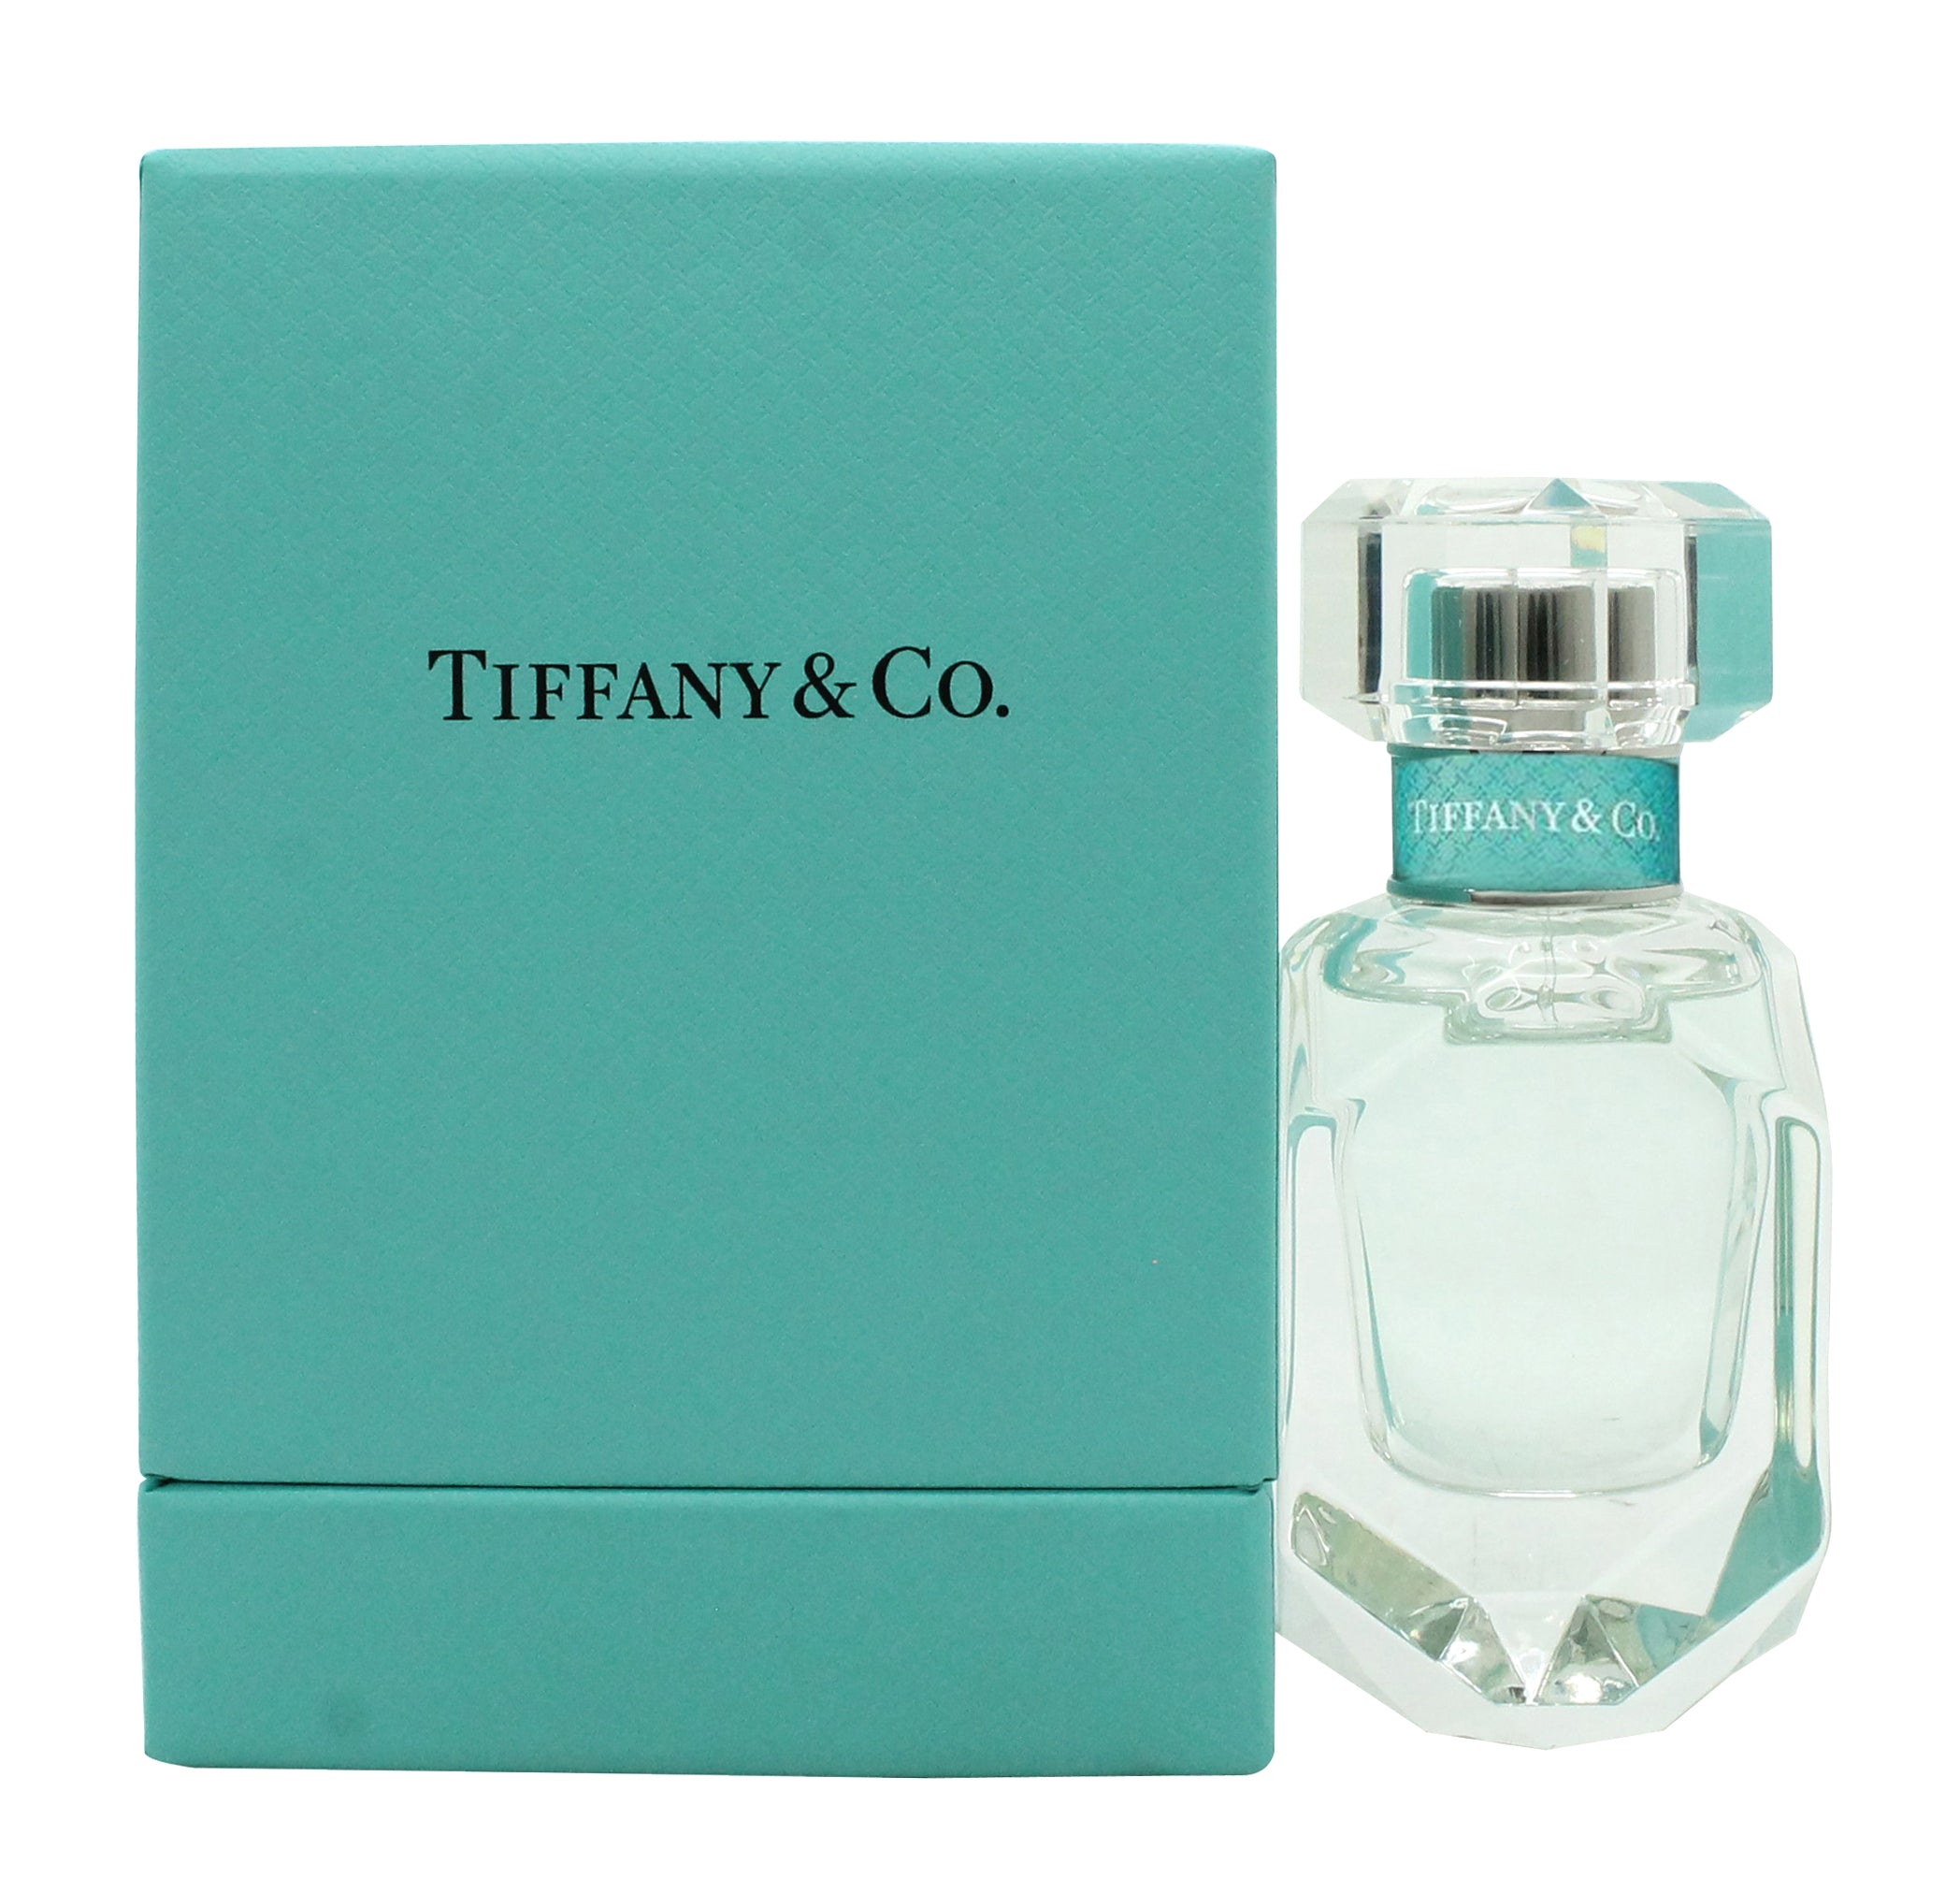 View Tiffany Co Eau de Parfum 30ml Spray information